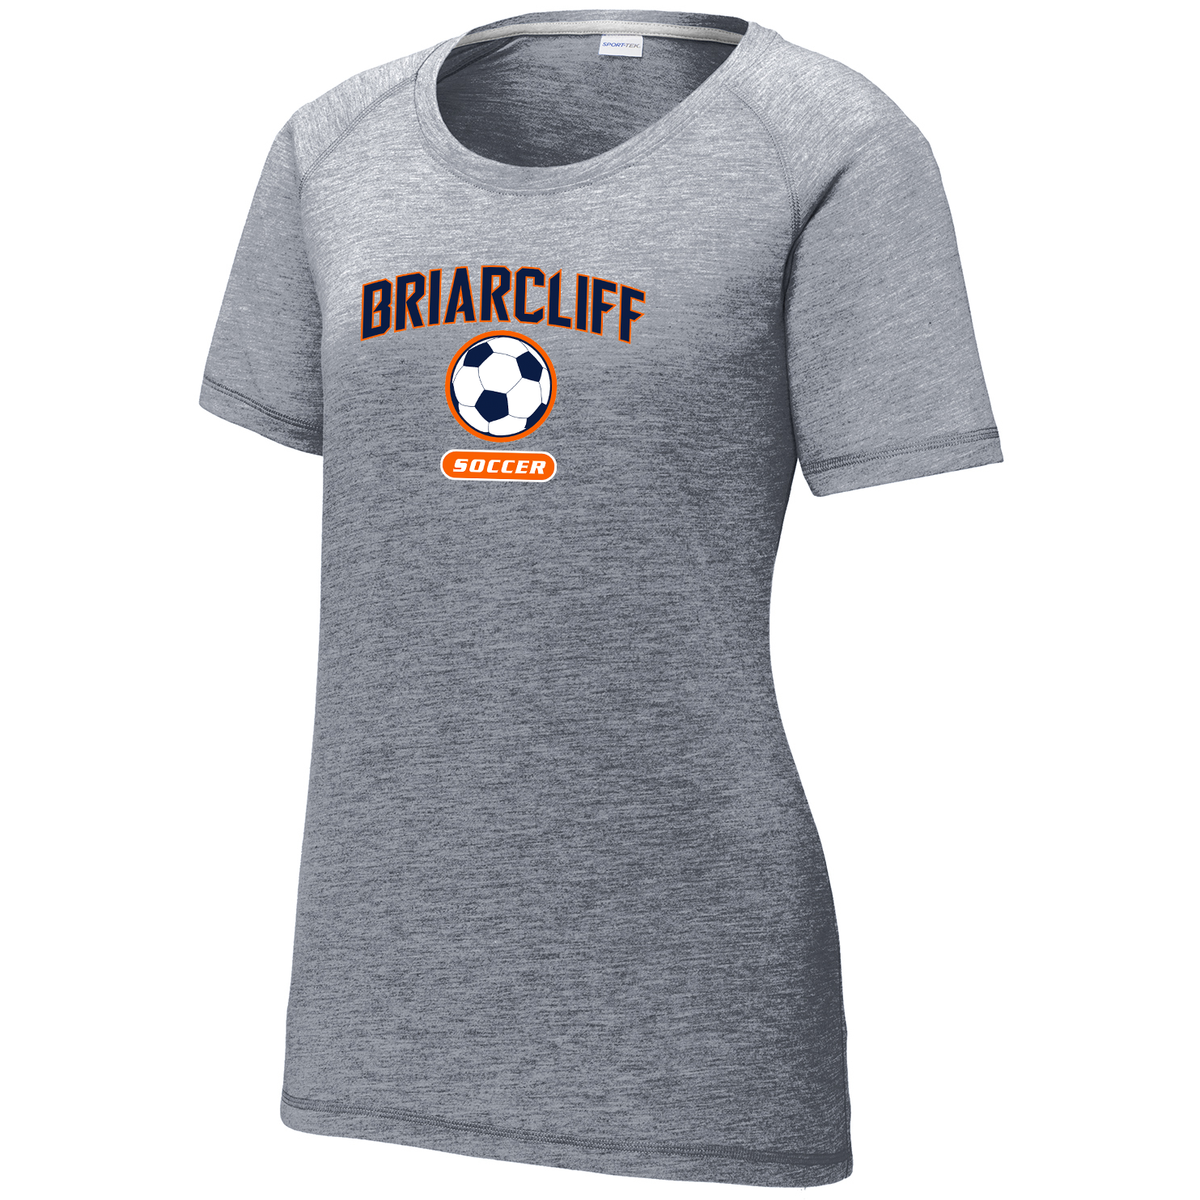 Briarcliff Soccer Women's Raglan CottonTouch